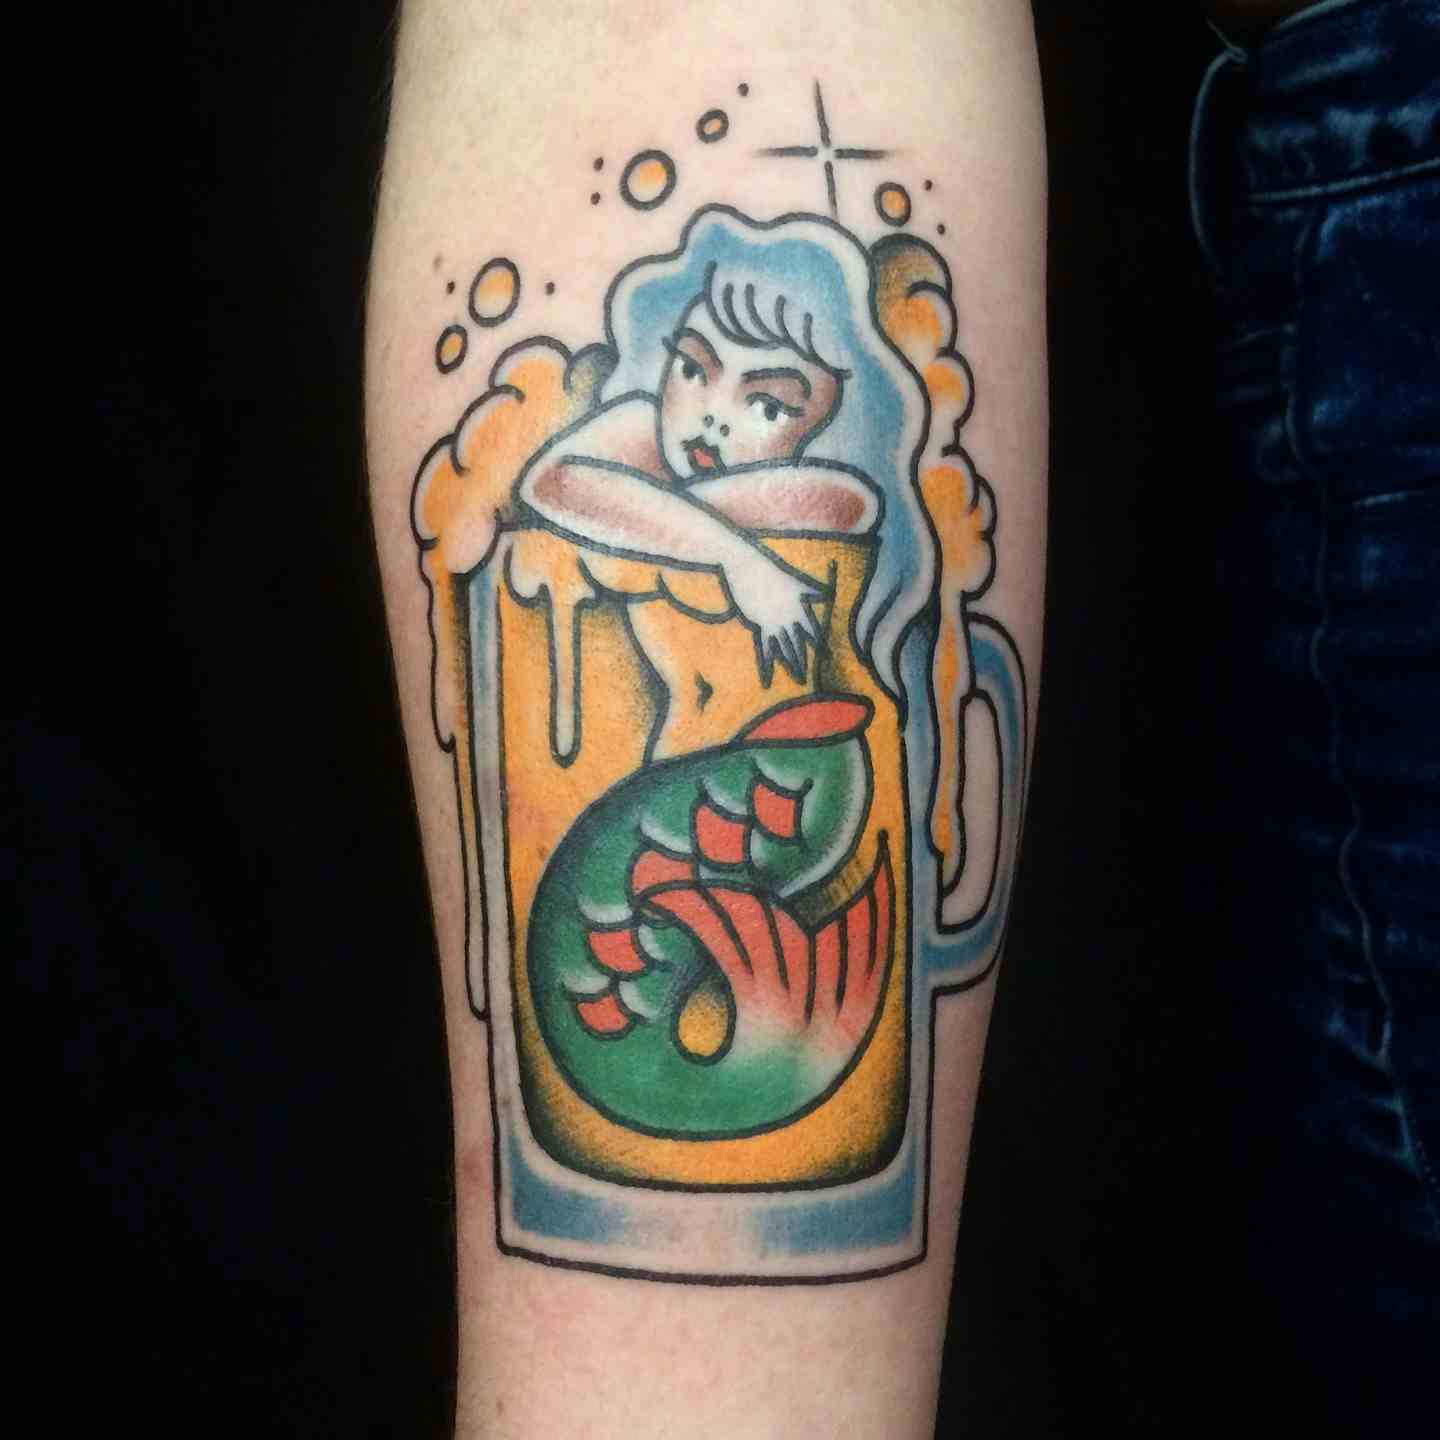 Mermaid in a beer glass tattoo